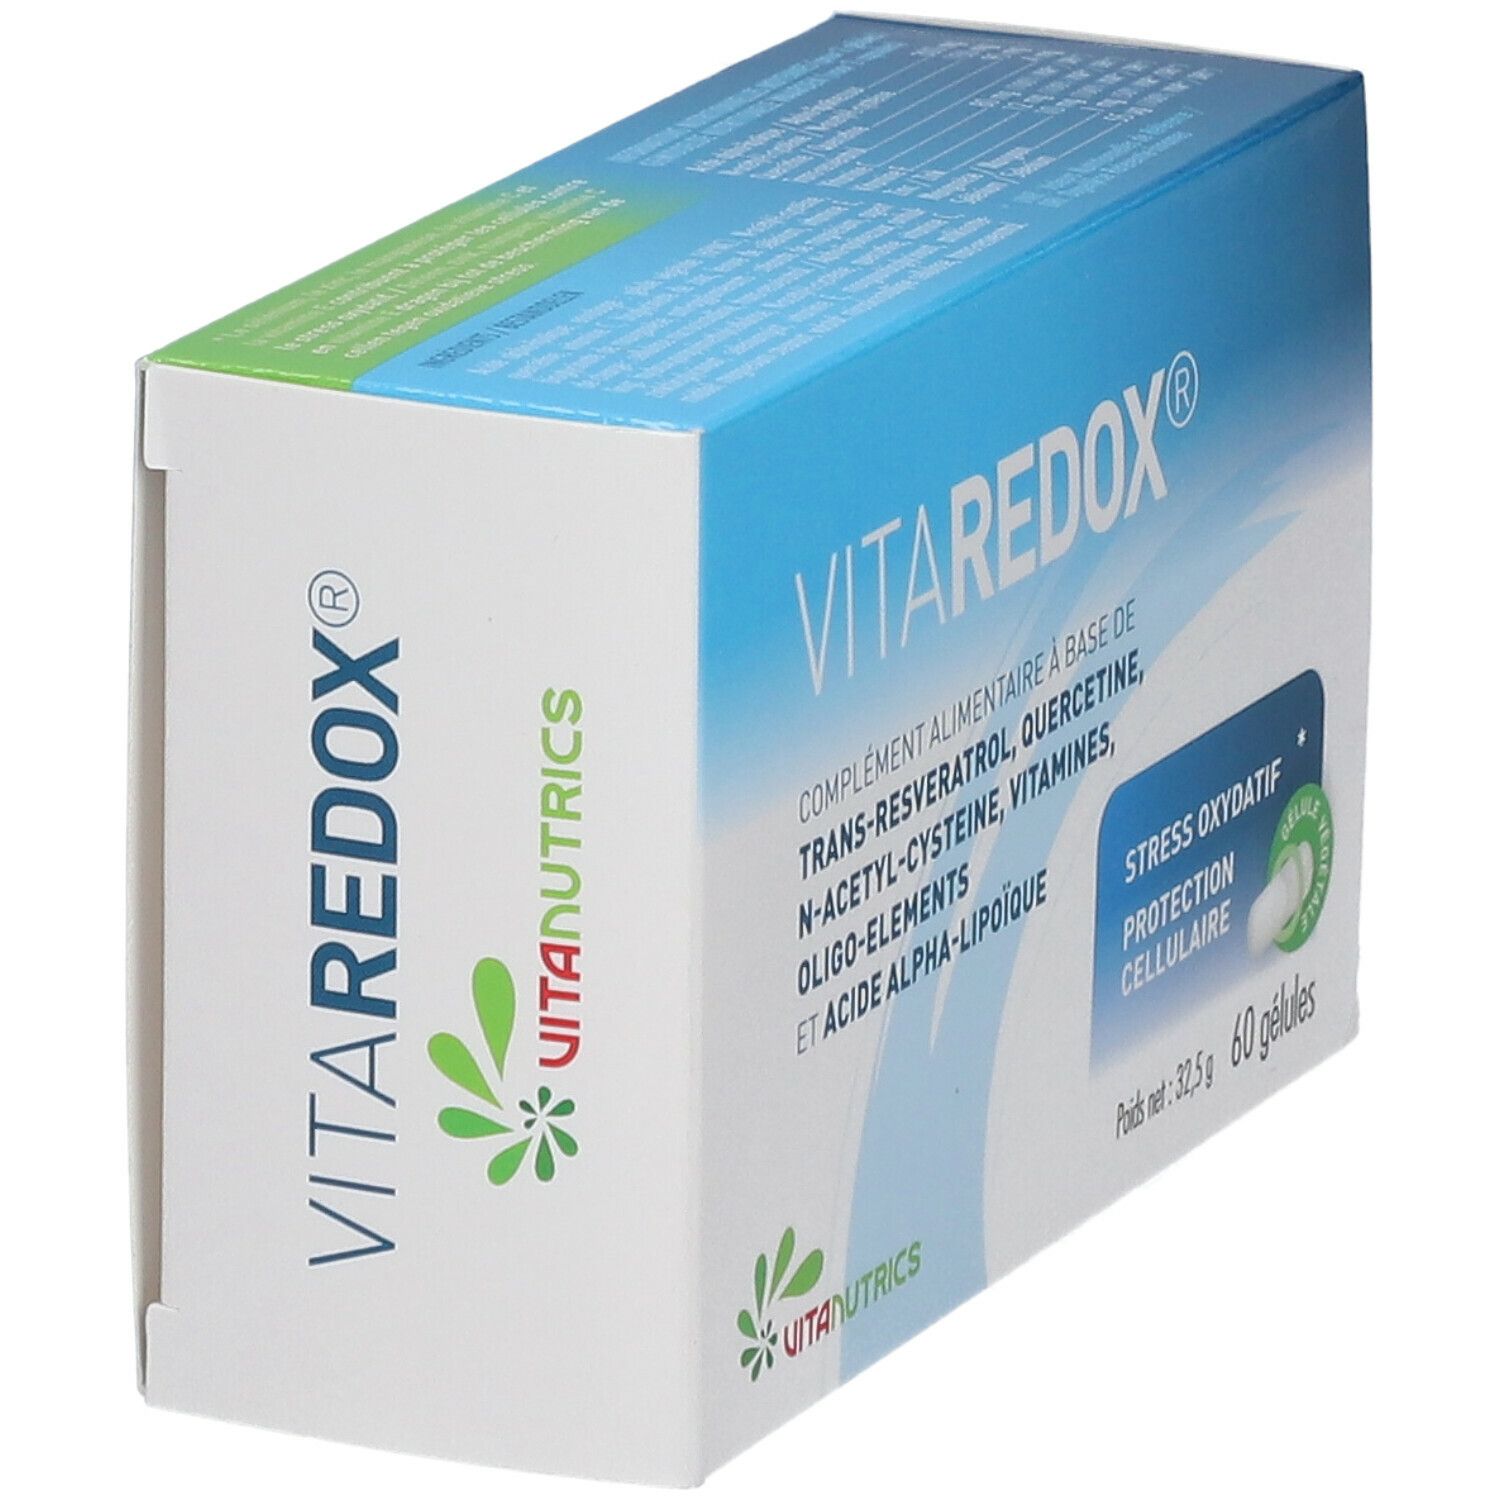 Vitaredox Vitanutrics